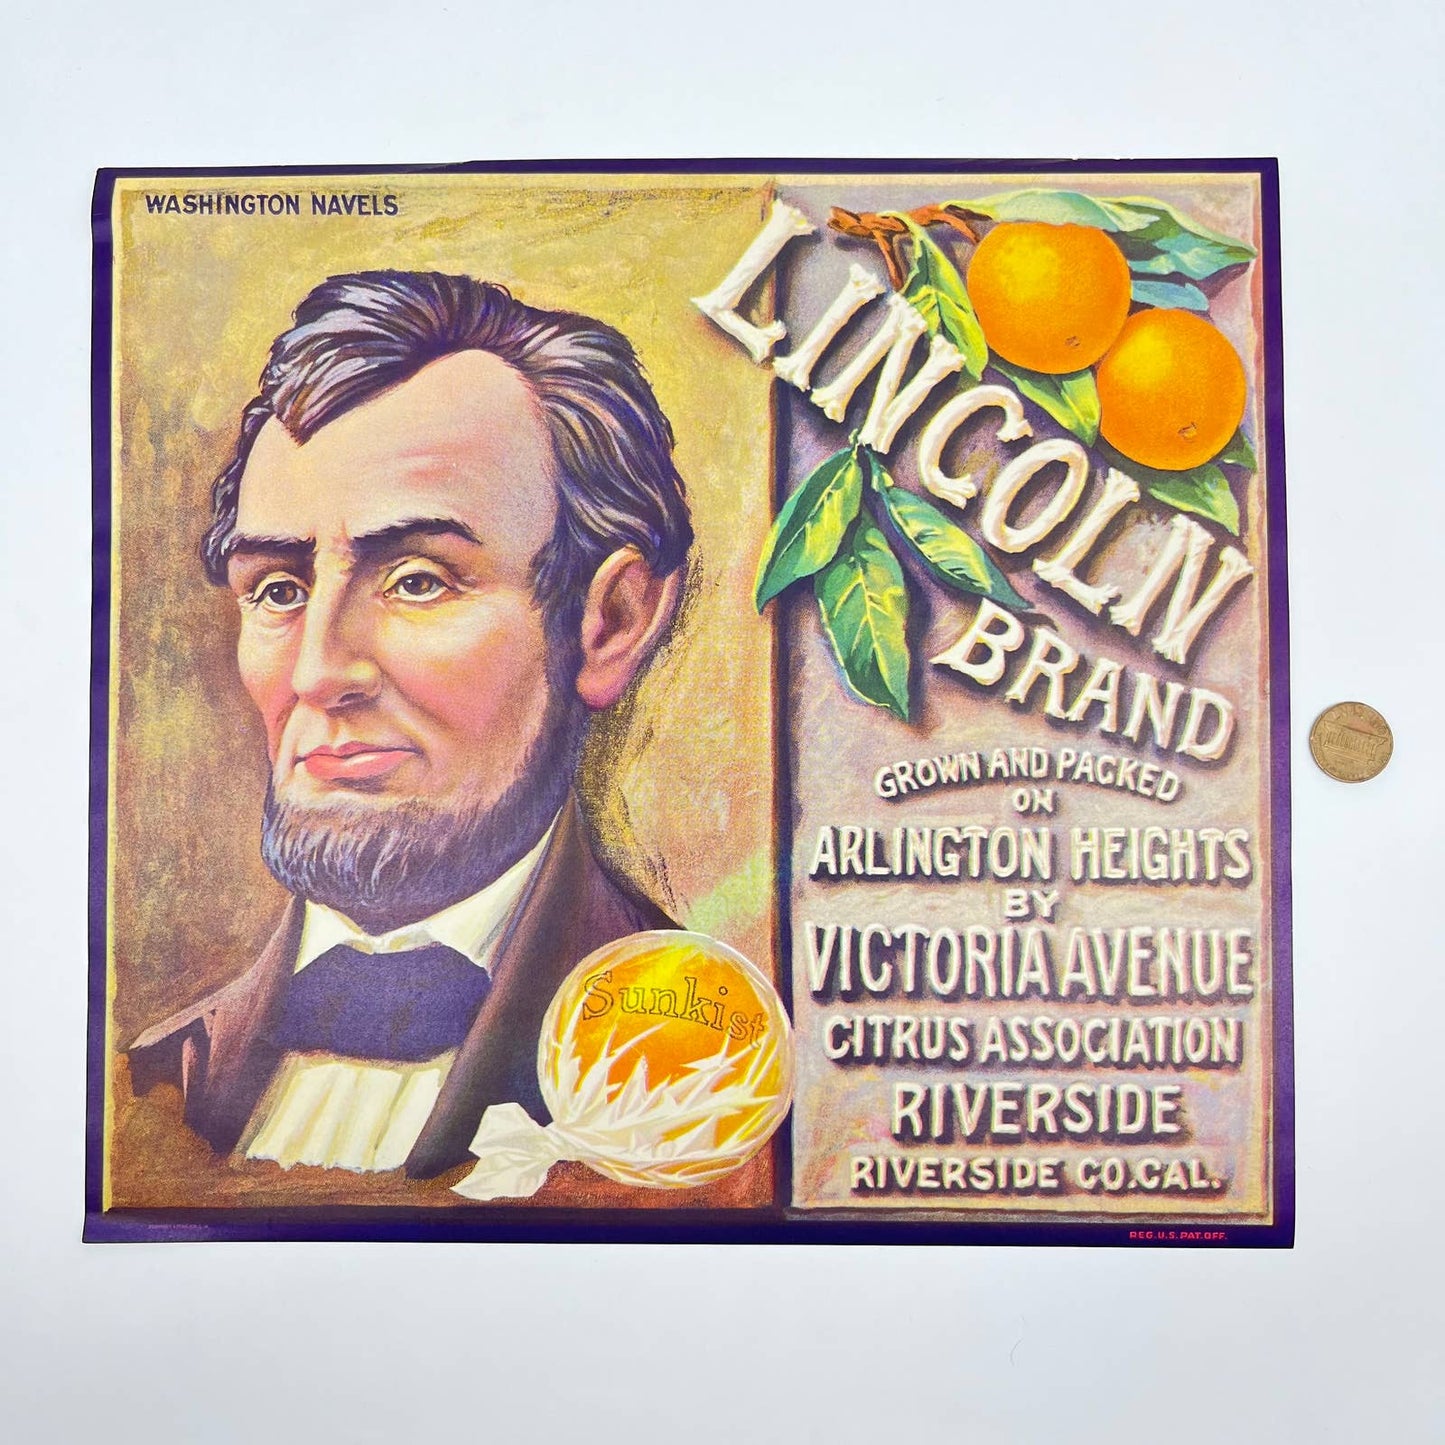 Lincoln Brand Sunkist Oranges Riverside California Original Crate Label FL3